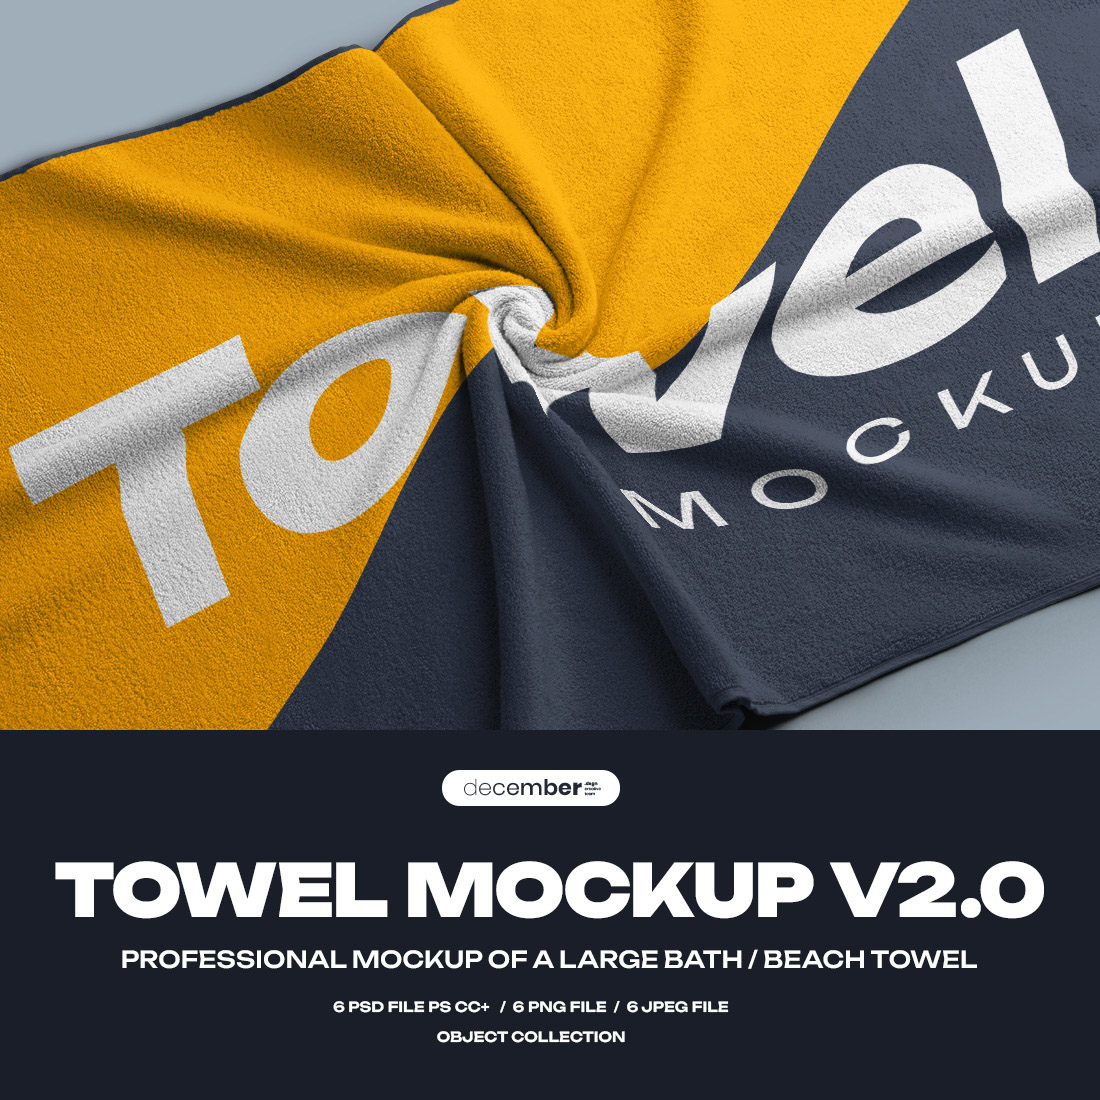 6 Mockup of a Large Bath v2 / Beach Towel cover image.